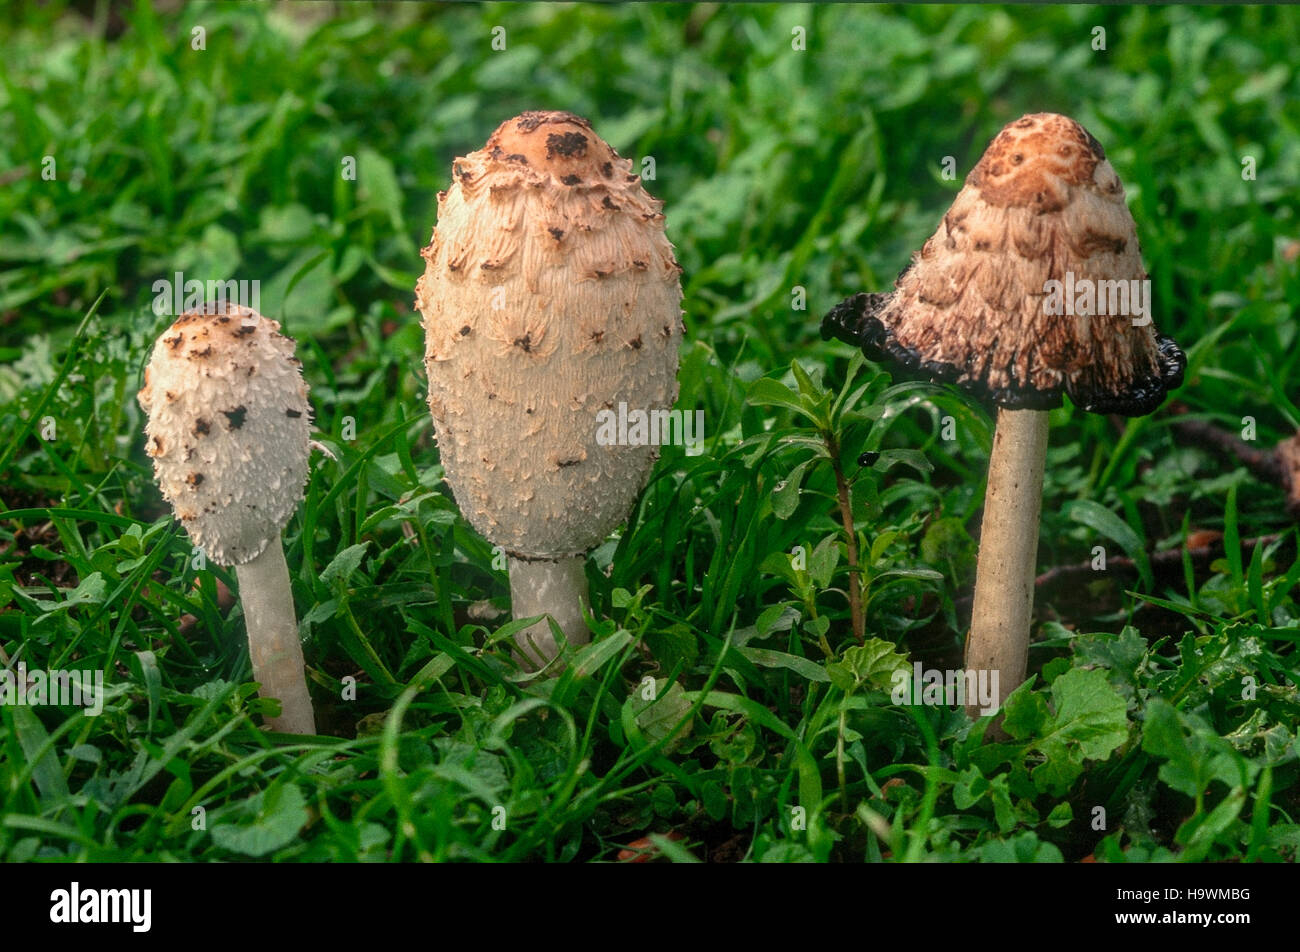 Edible mushrooms - coprinus Comatus Stock Photo